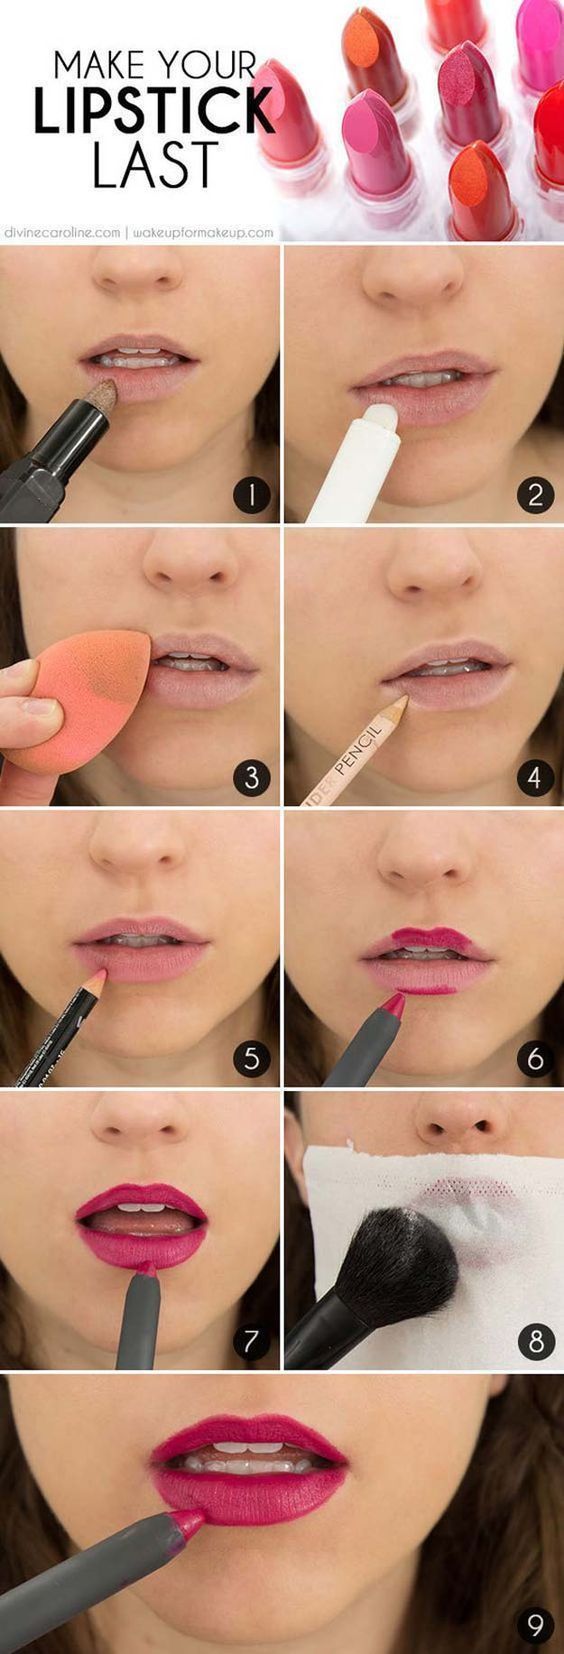 5 makeup For Teens link ideas